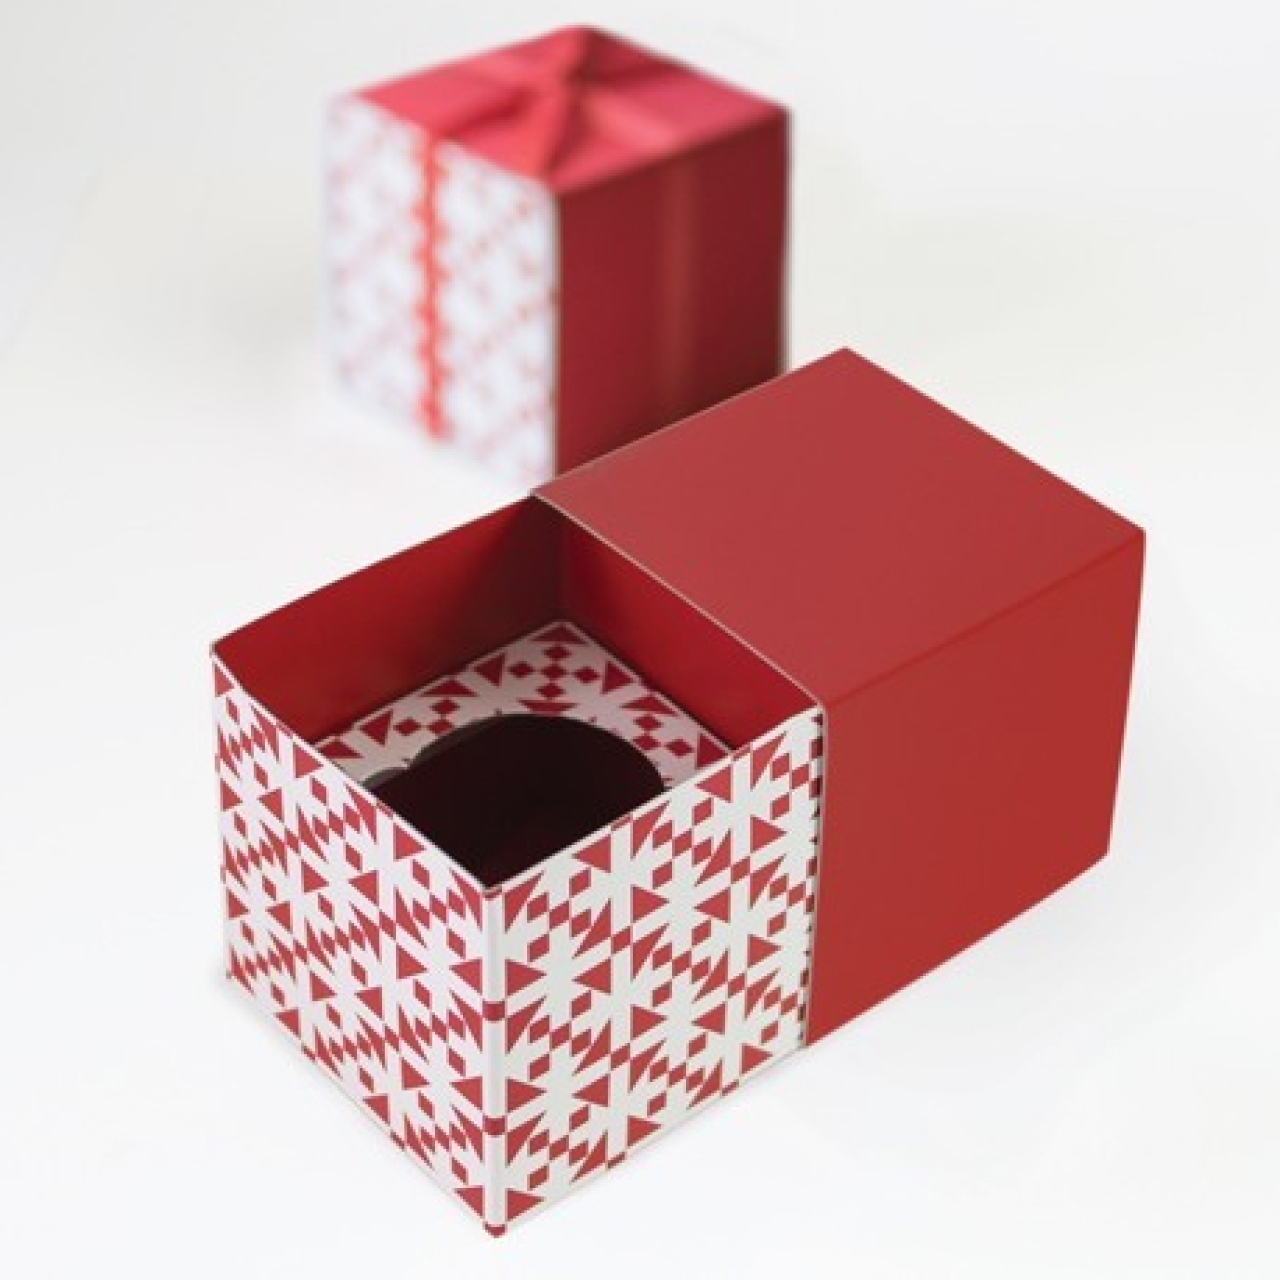 HoM Cupcake Box für 1 Cupcake, rot